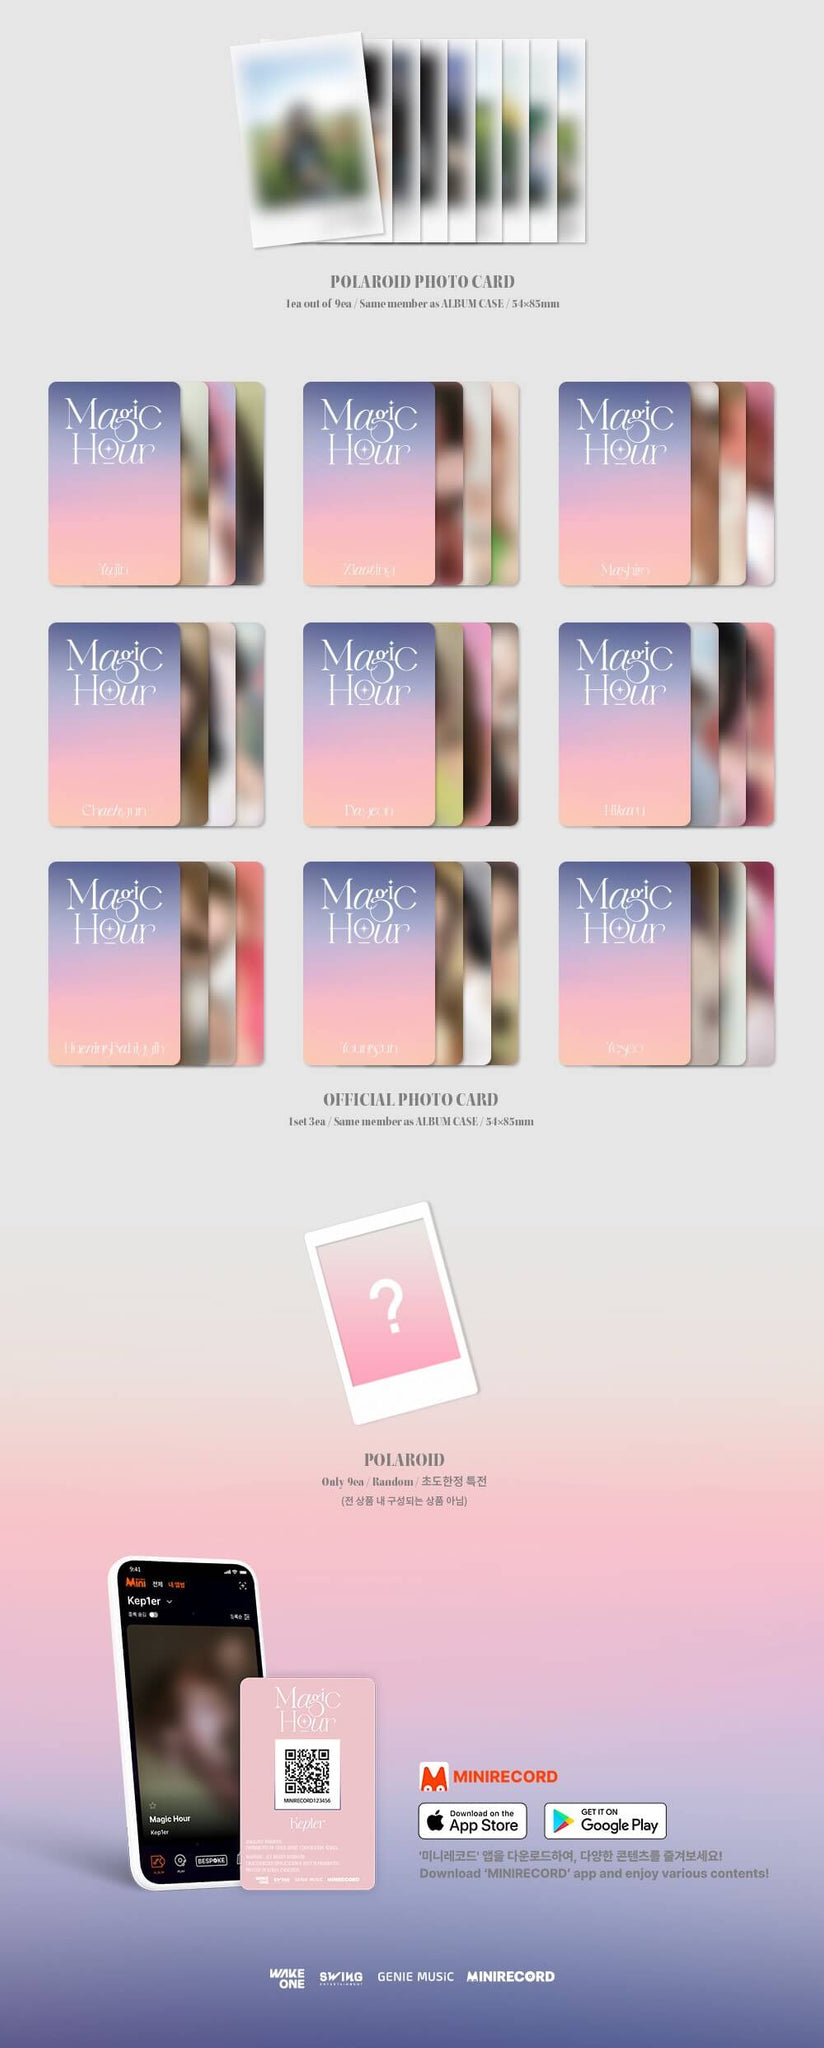 Kep1er 5th Mini Album Magic Hour Platform Version Inclusions Polaroid Photocard Ofiicial Photocard Set 1st Press Limited Polaroid